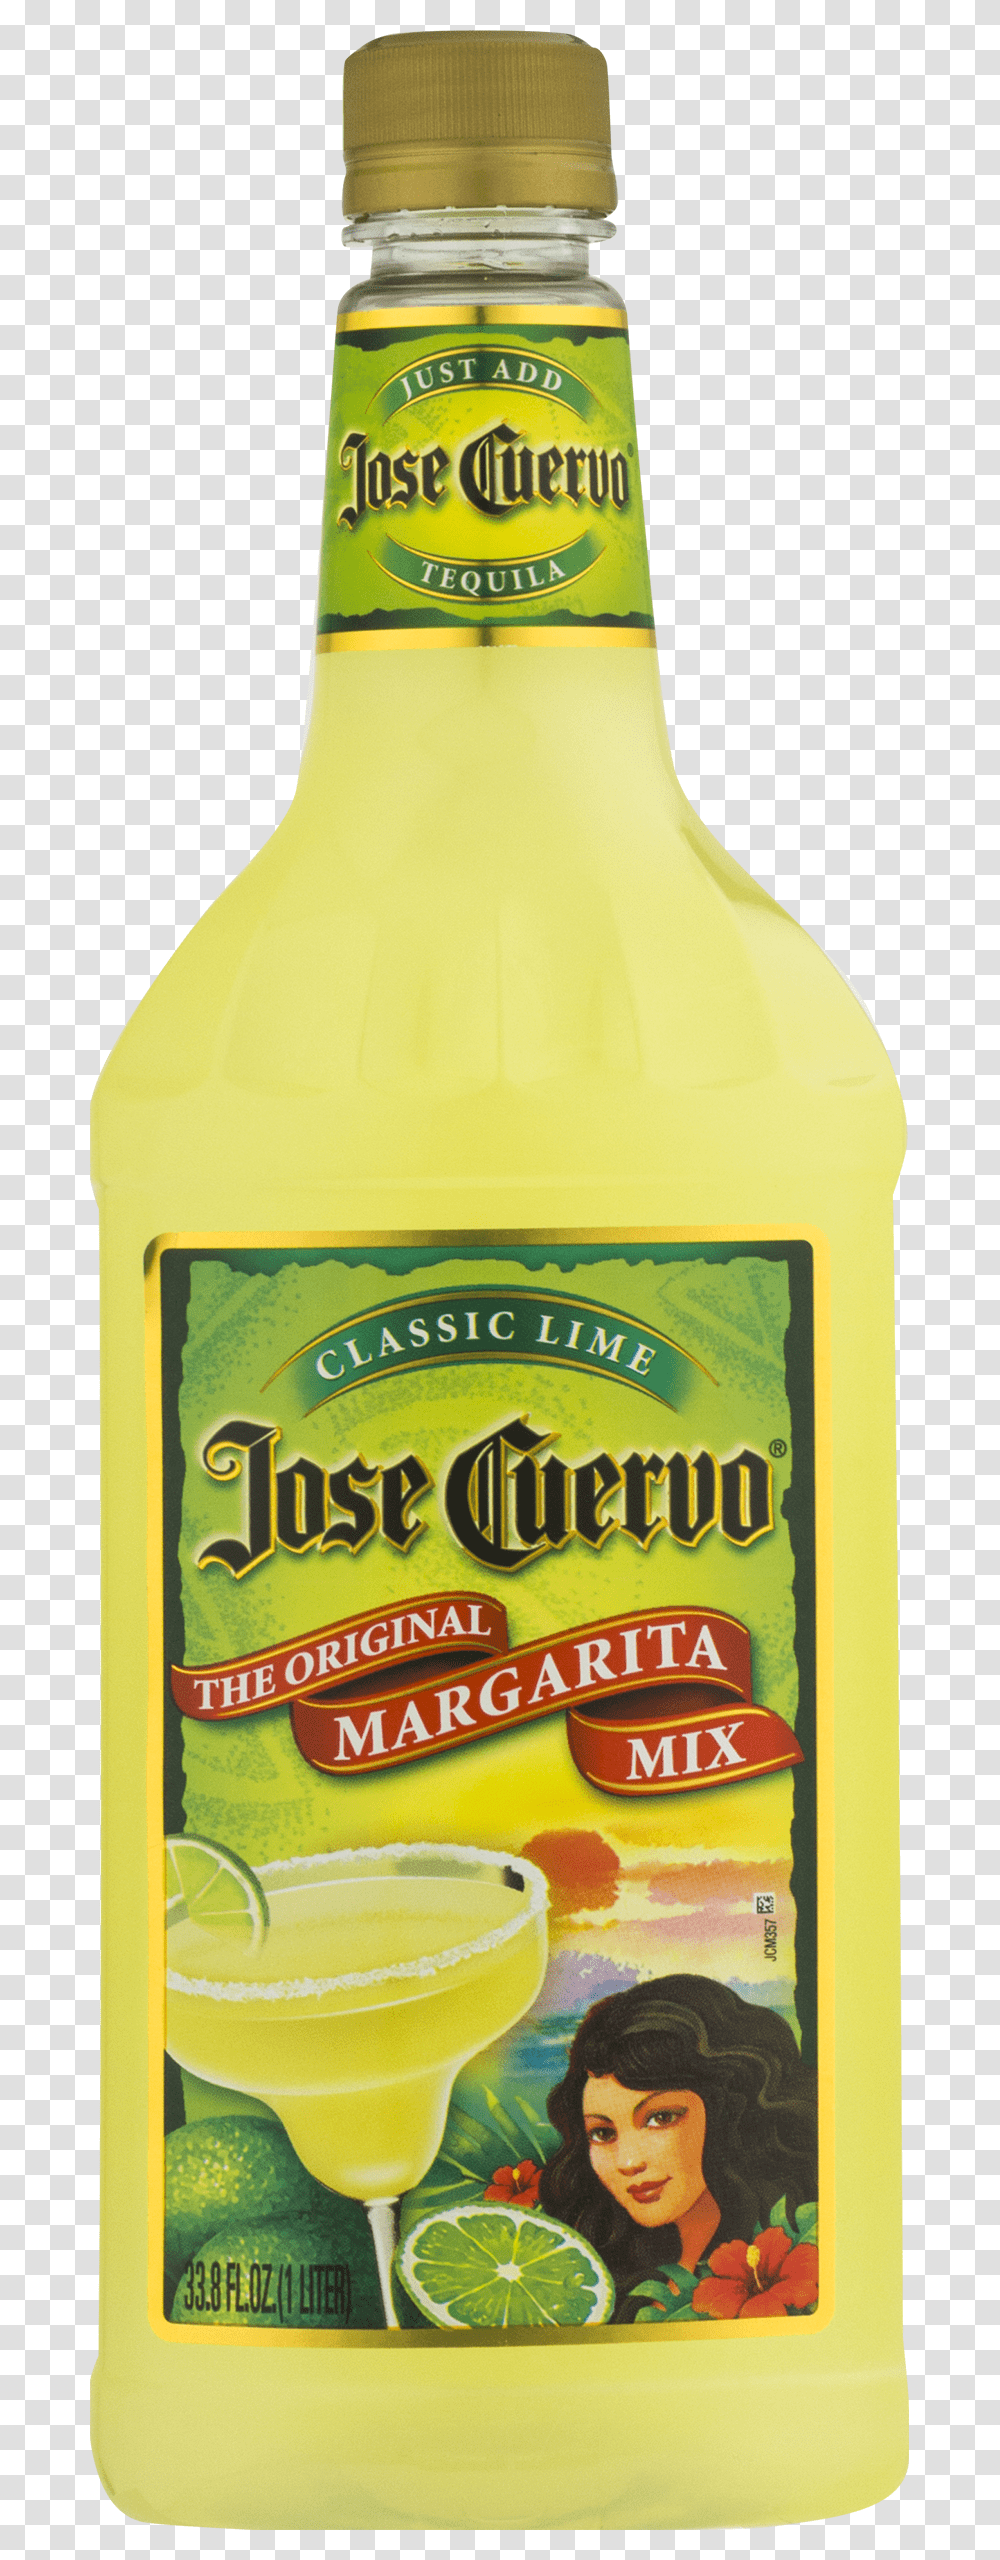 Jose Margarita Mix With Alcohol, Beverage, Drink, Liquor, Person Transparent Png